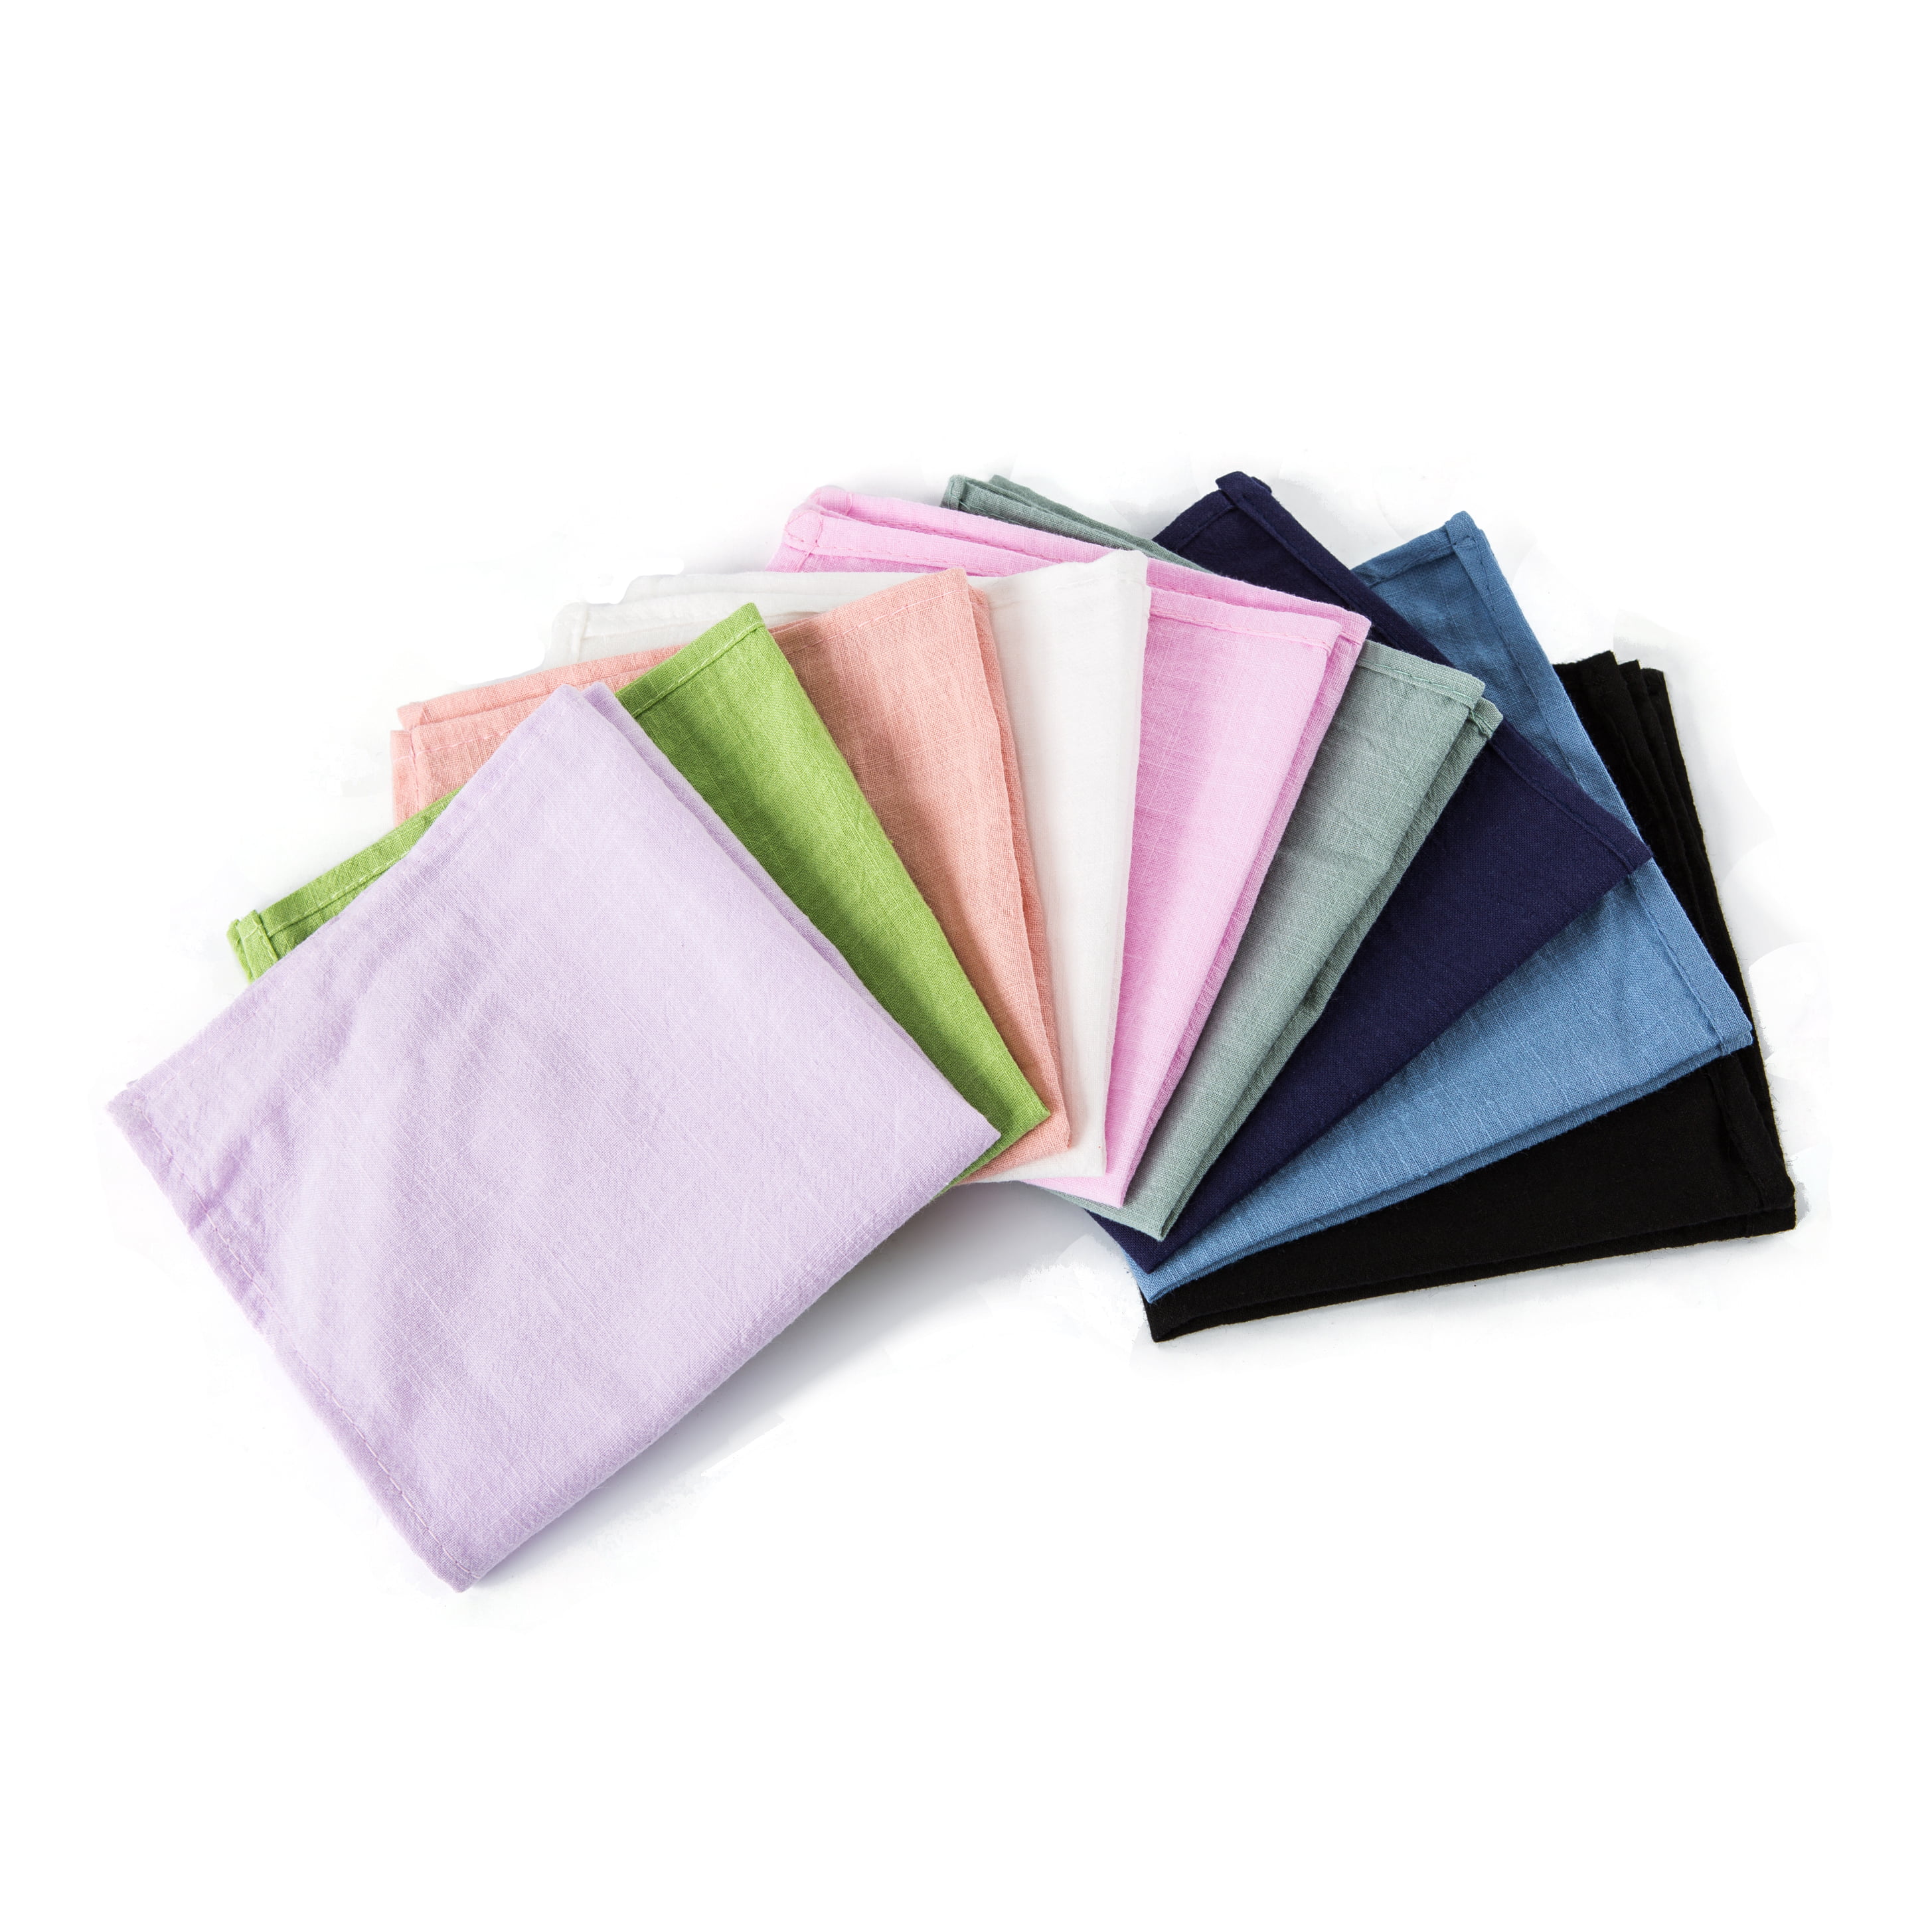  Kalopro Cotton Linen Cloth Napkins Set of 8, Handmade